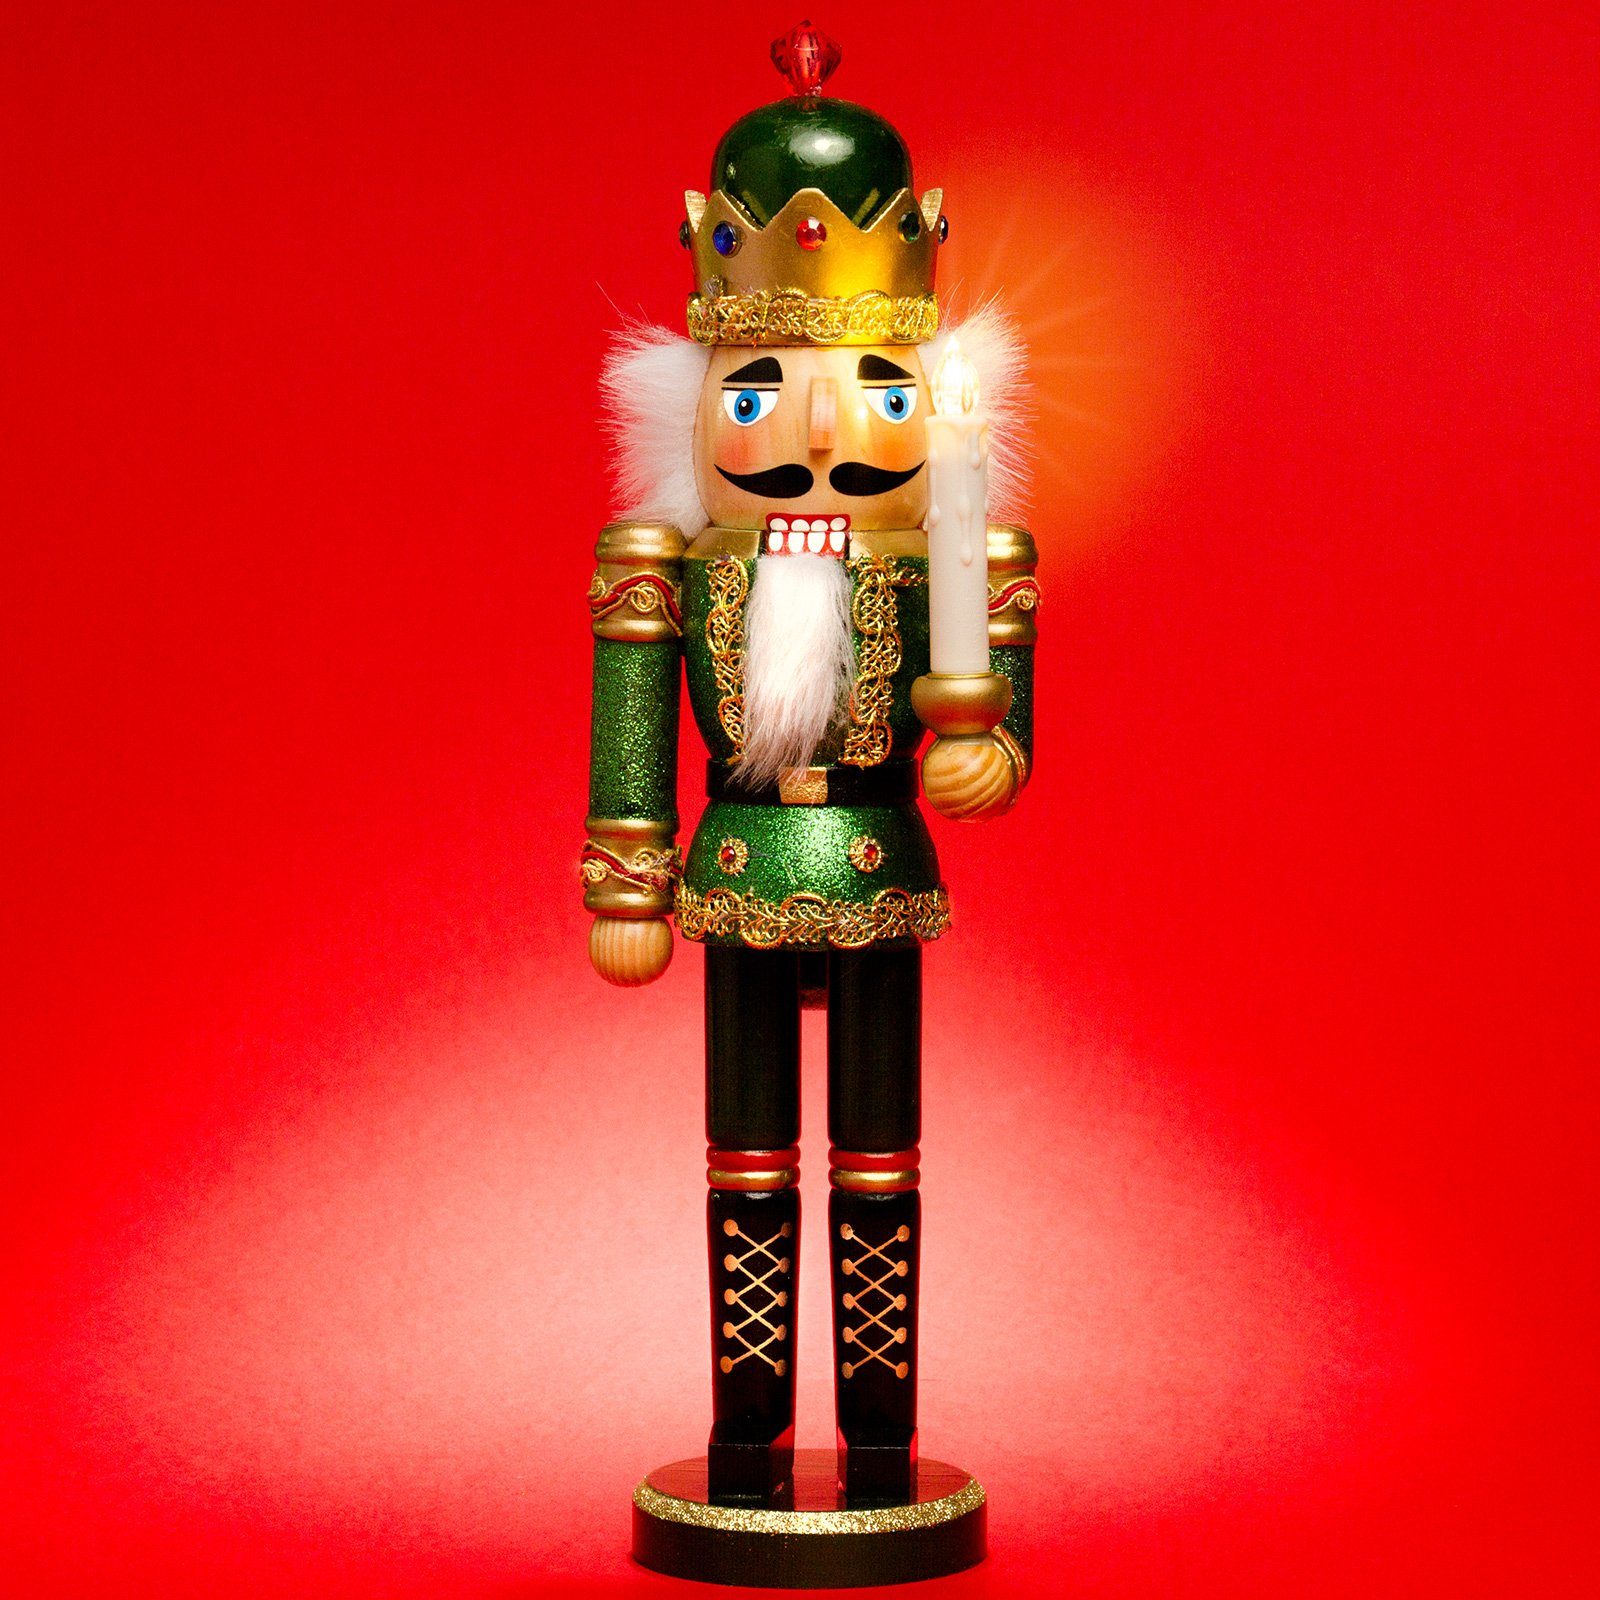 grün C03 NK-C Deko mit KÖNIG Nussknacker XL SIKORA Holz aus Weihnachtsfigur Glitzer LED - Kerze